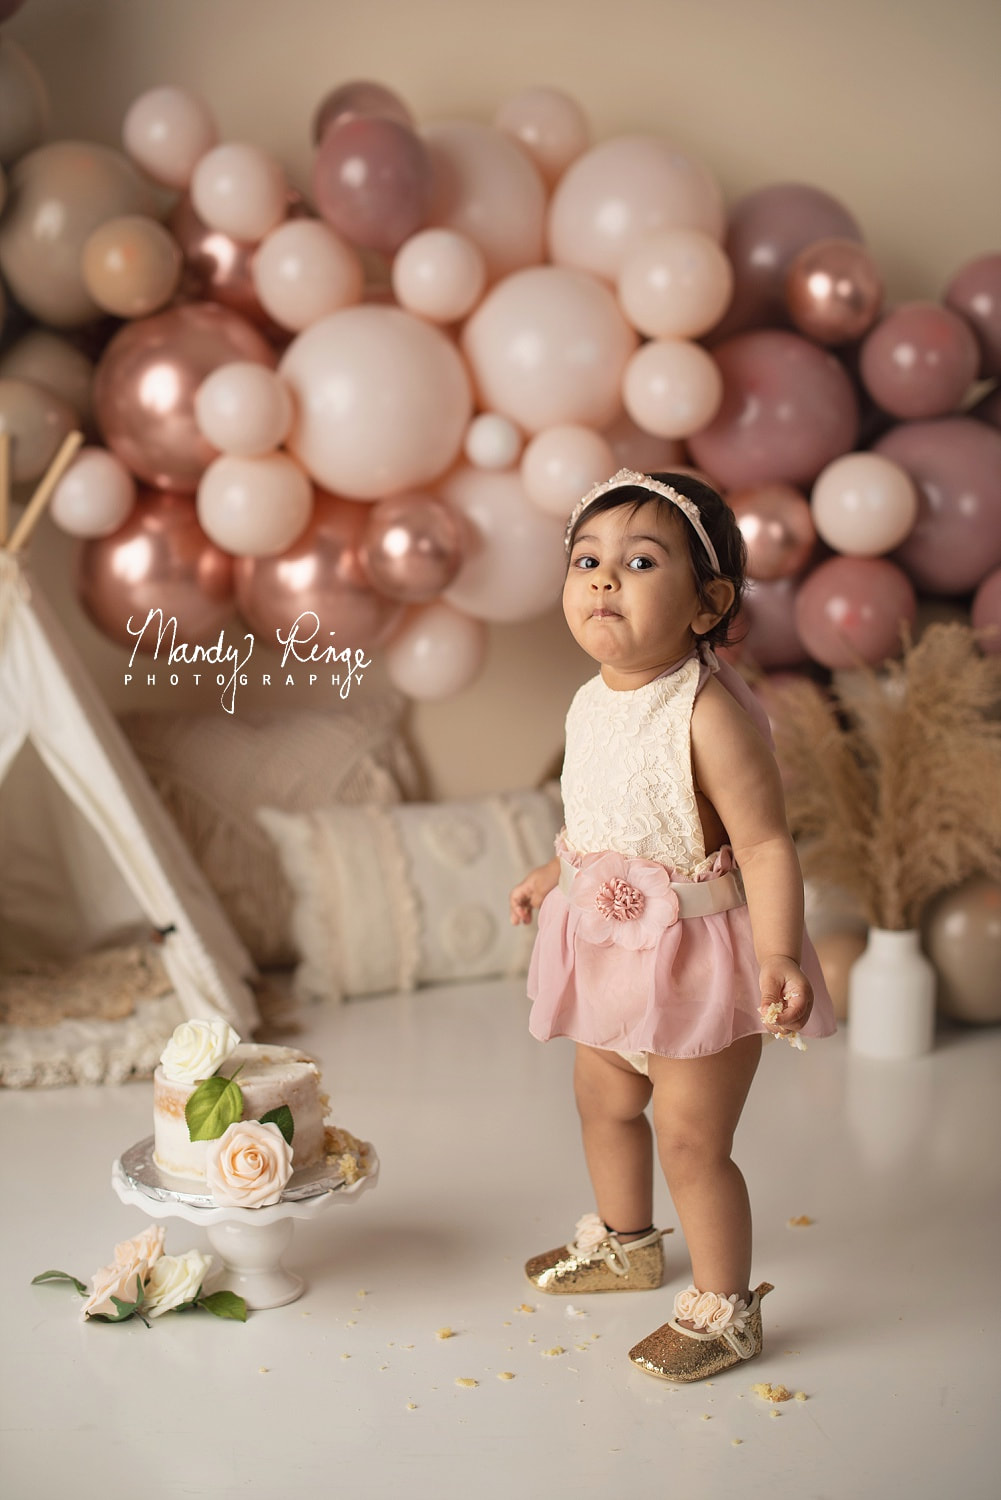 First birthday milestone session, cake smash // teepee, boho balloons, neutral, dusty pink // Mandy Ringe Photography // Sycamore, IL Studio Photographer